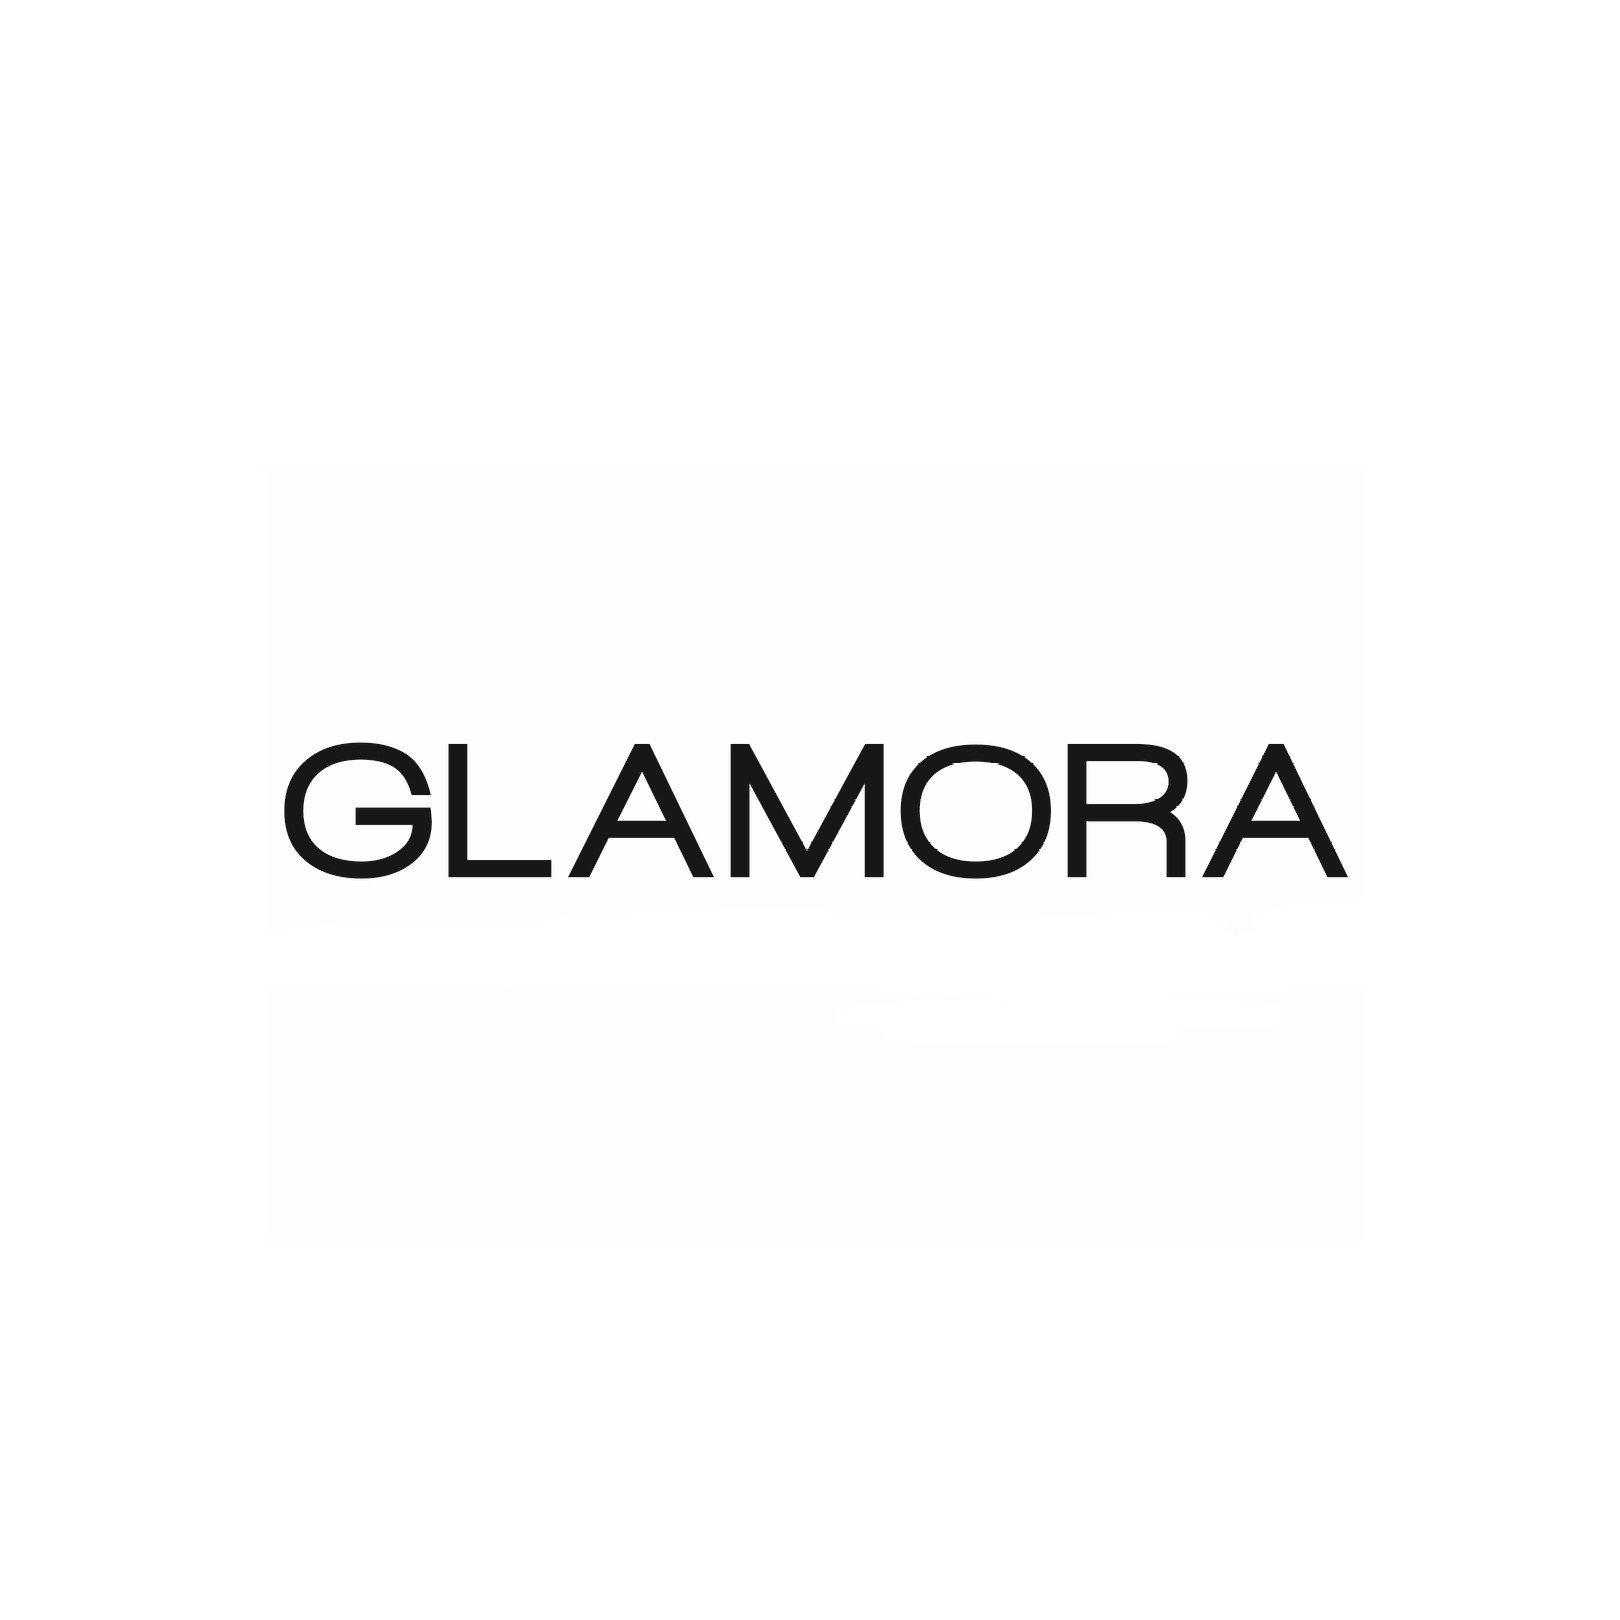 142-glamoradesign-wallpaper-scaled-to-fit-logo.jpg